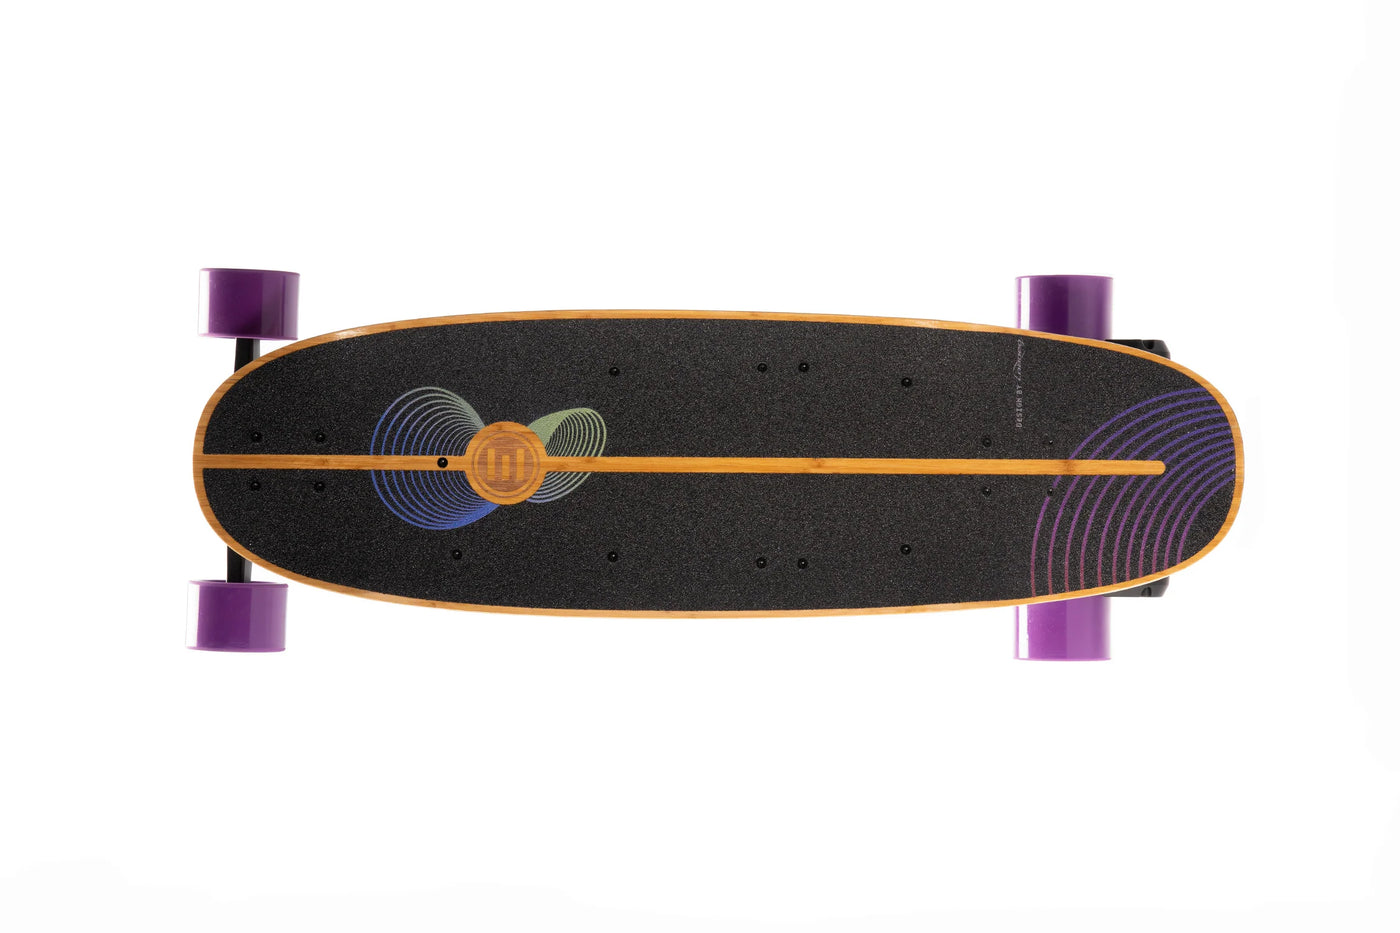 Evolve Onirique - Electric Skateboard